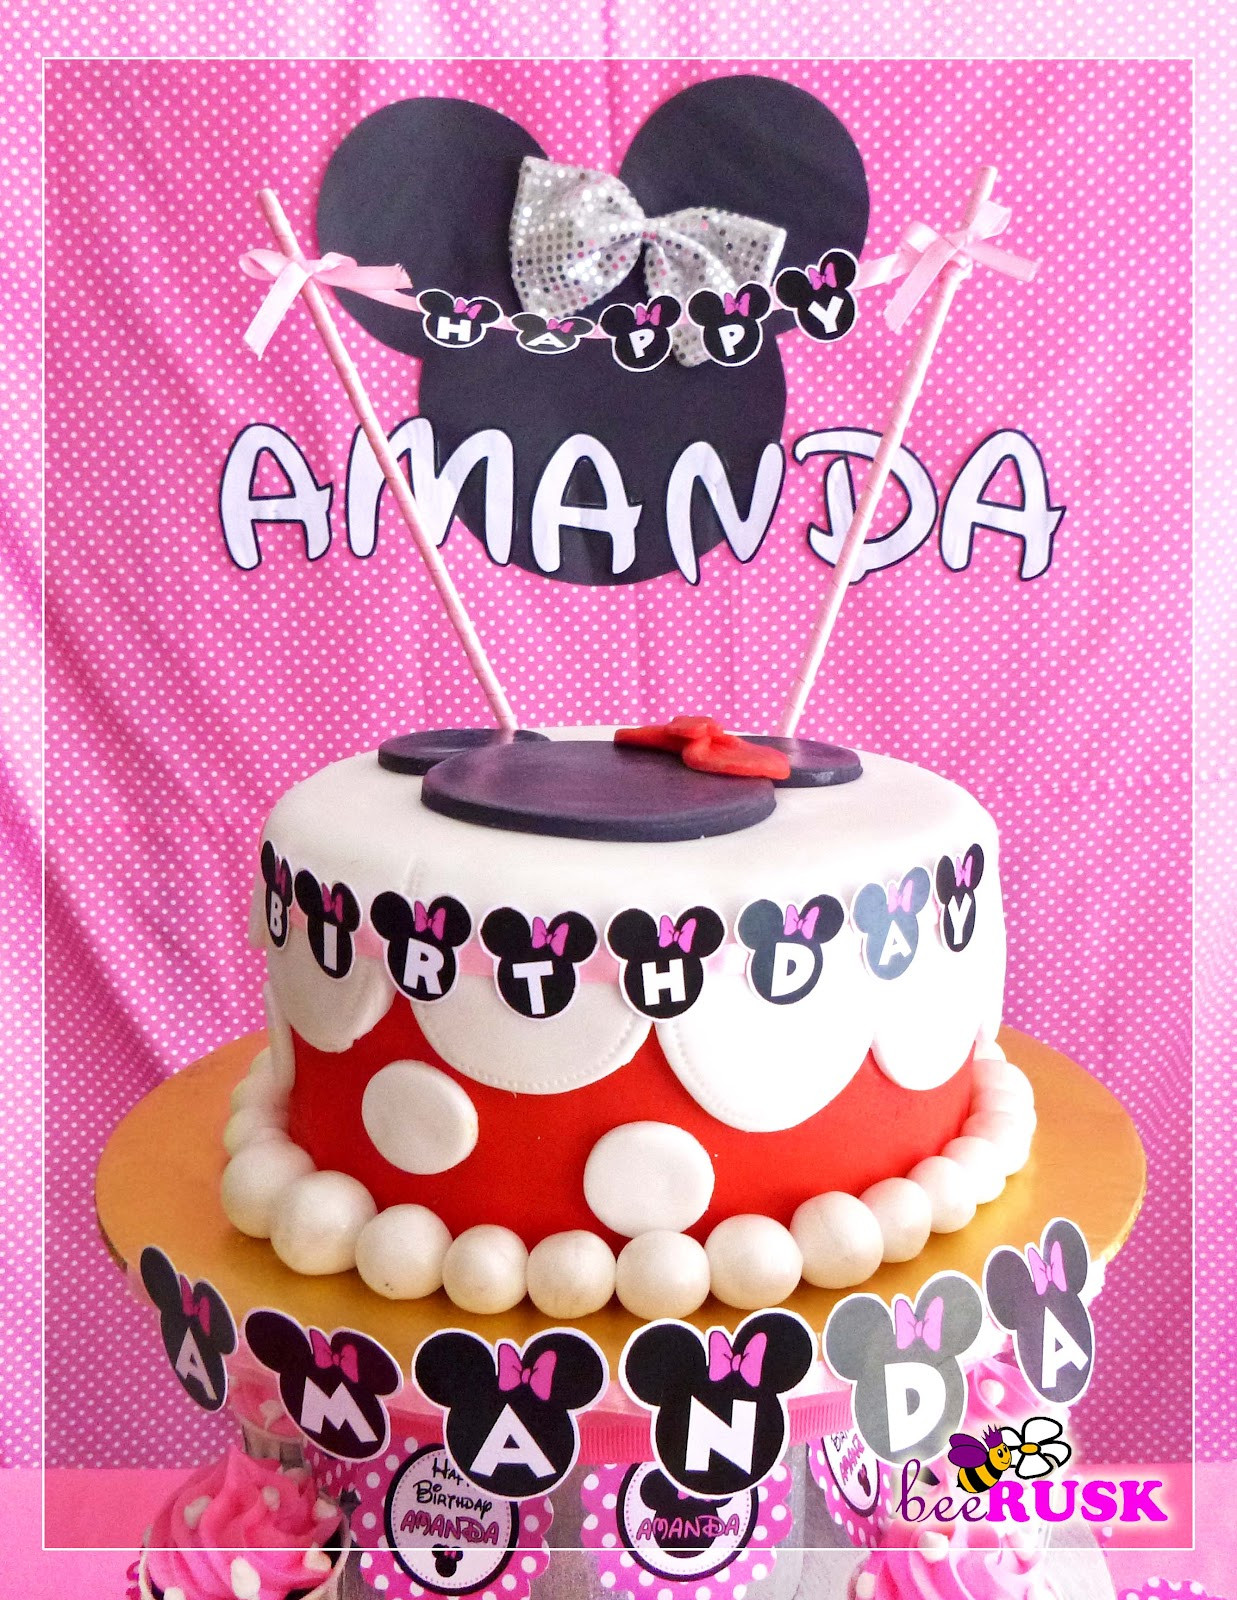 Happy Birthday Amanda Cake
 Sweetie Lil beeRusk July 2012